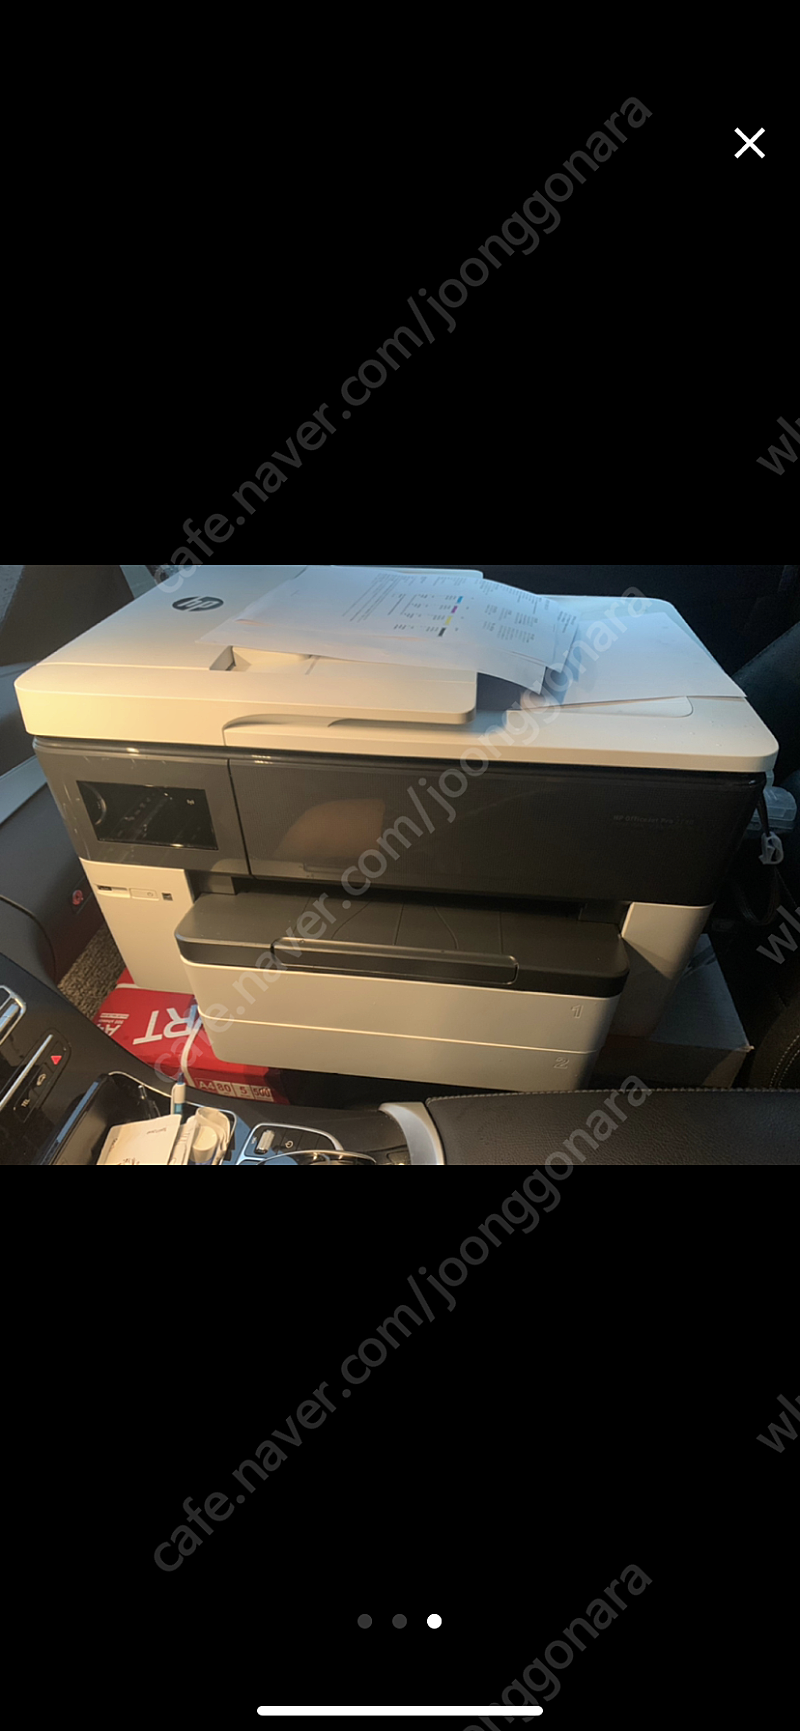 HP 7740 무한잉크 프린터 판매합니다.